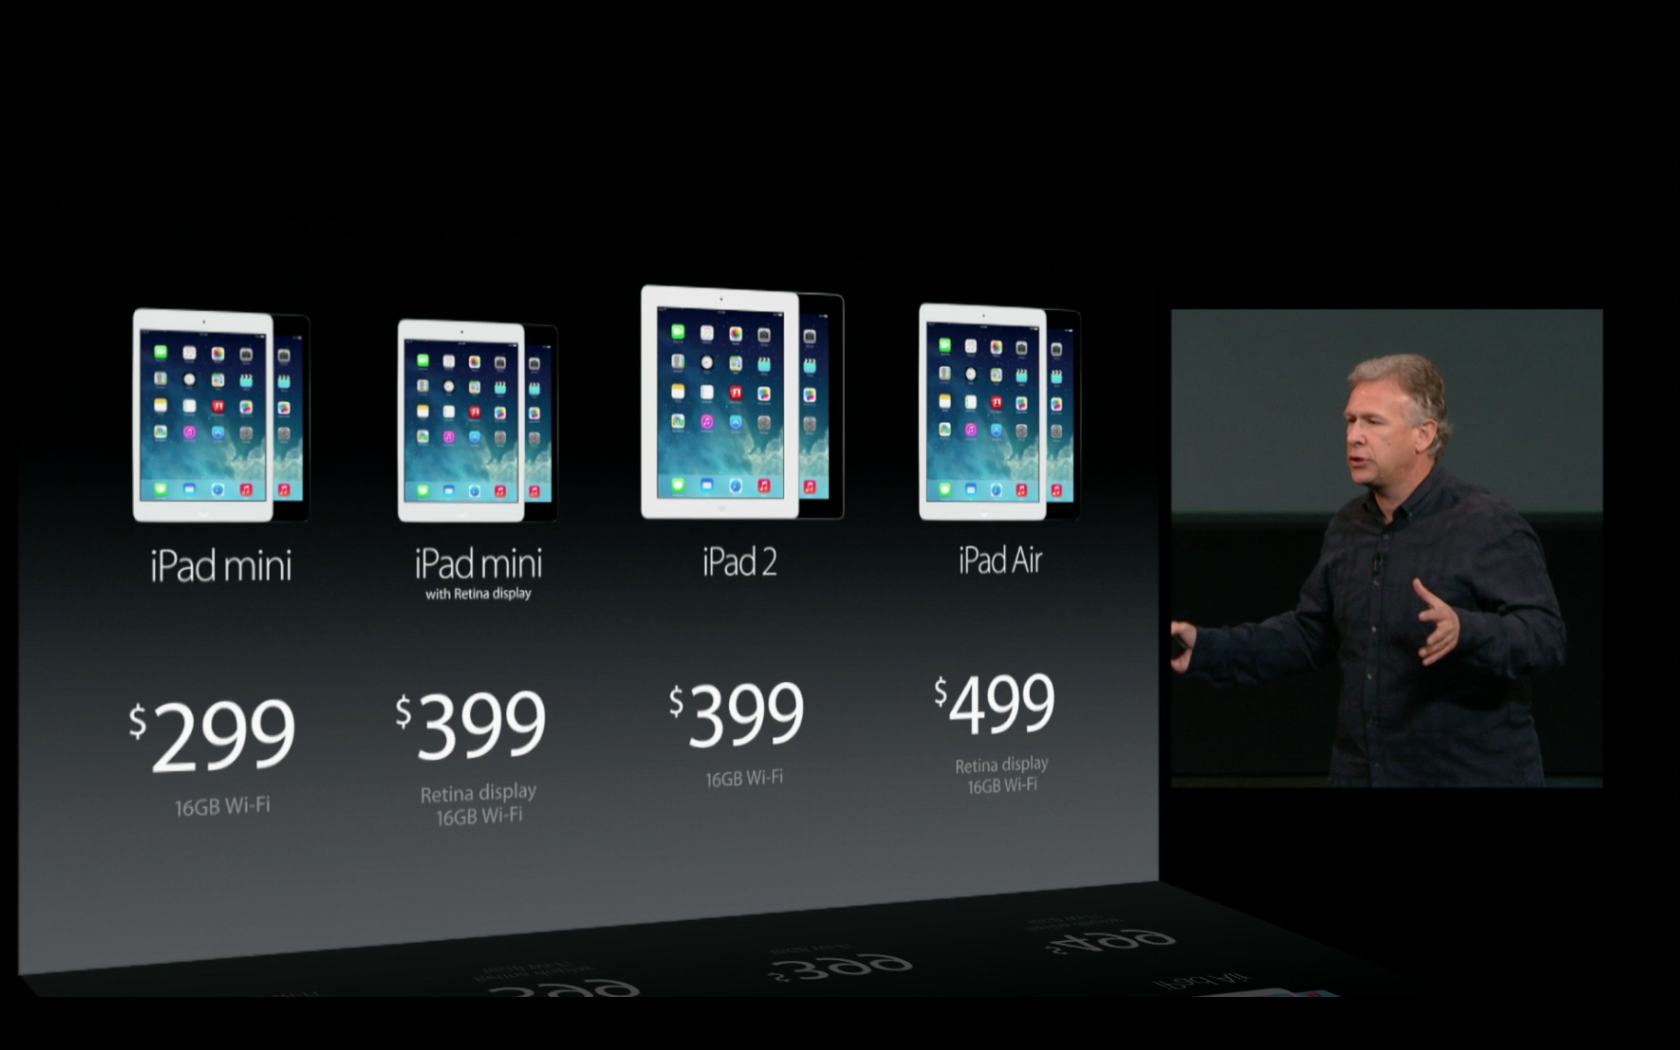 Don't expect iPad Air and iPad mini 2 pre-orders.